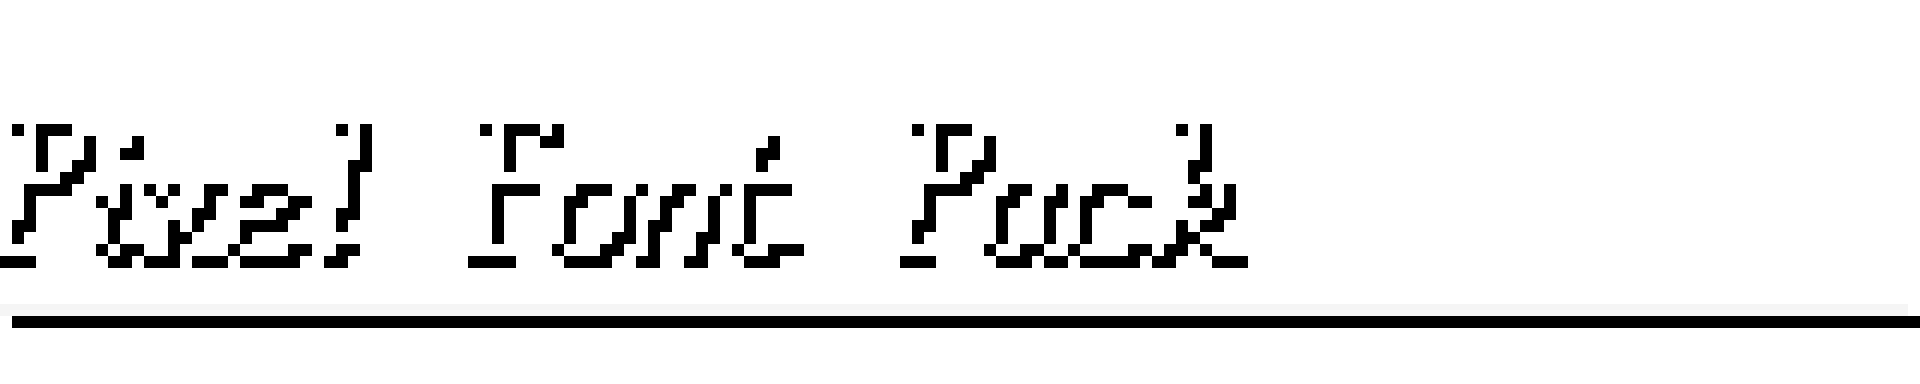 Pixel Font Pack